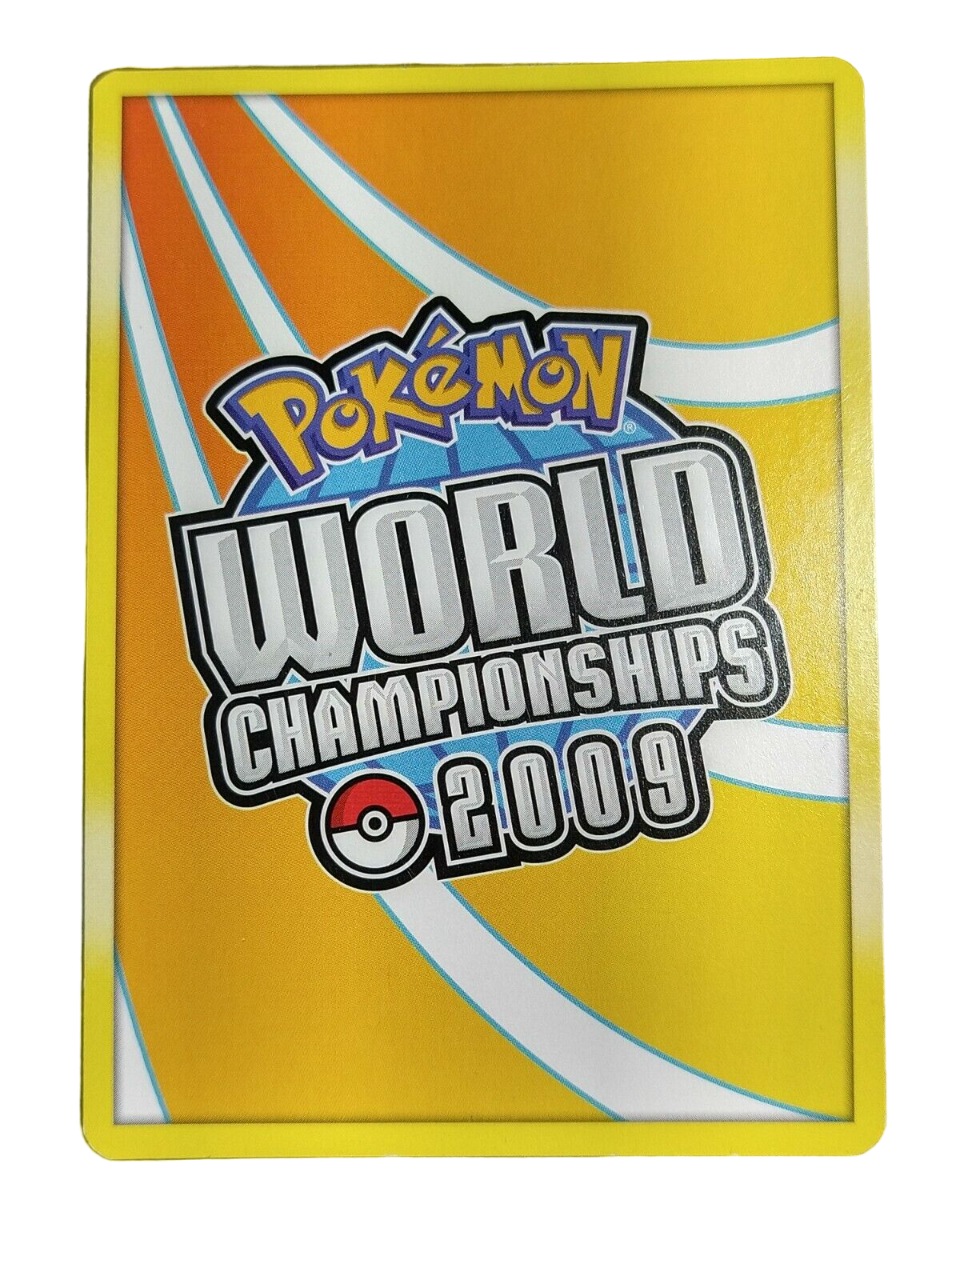 2009 World Championship card back